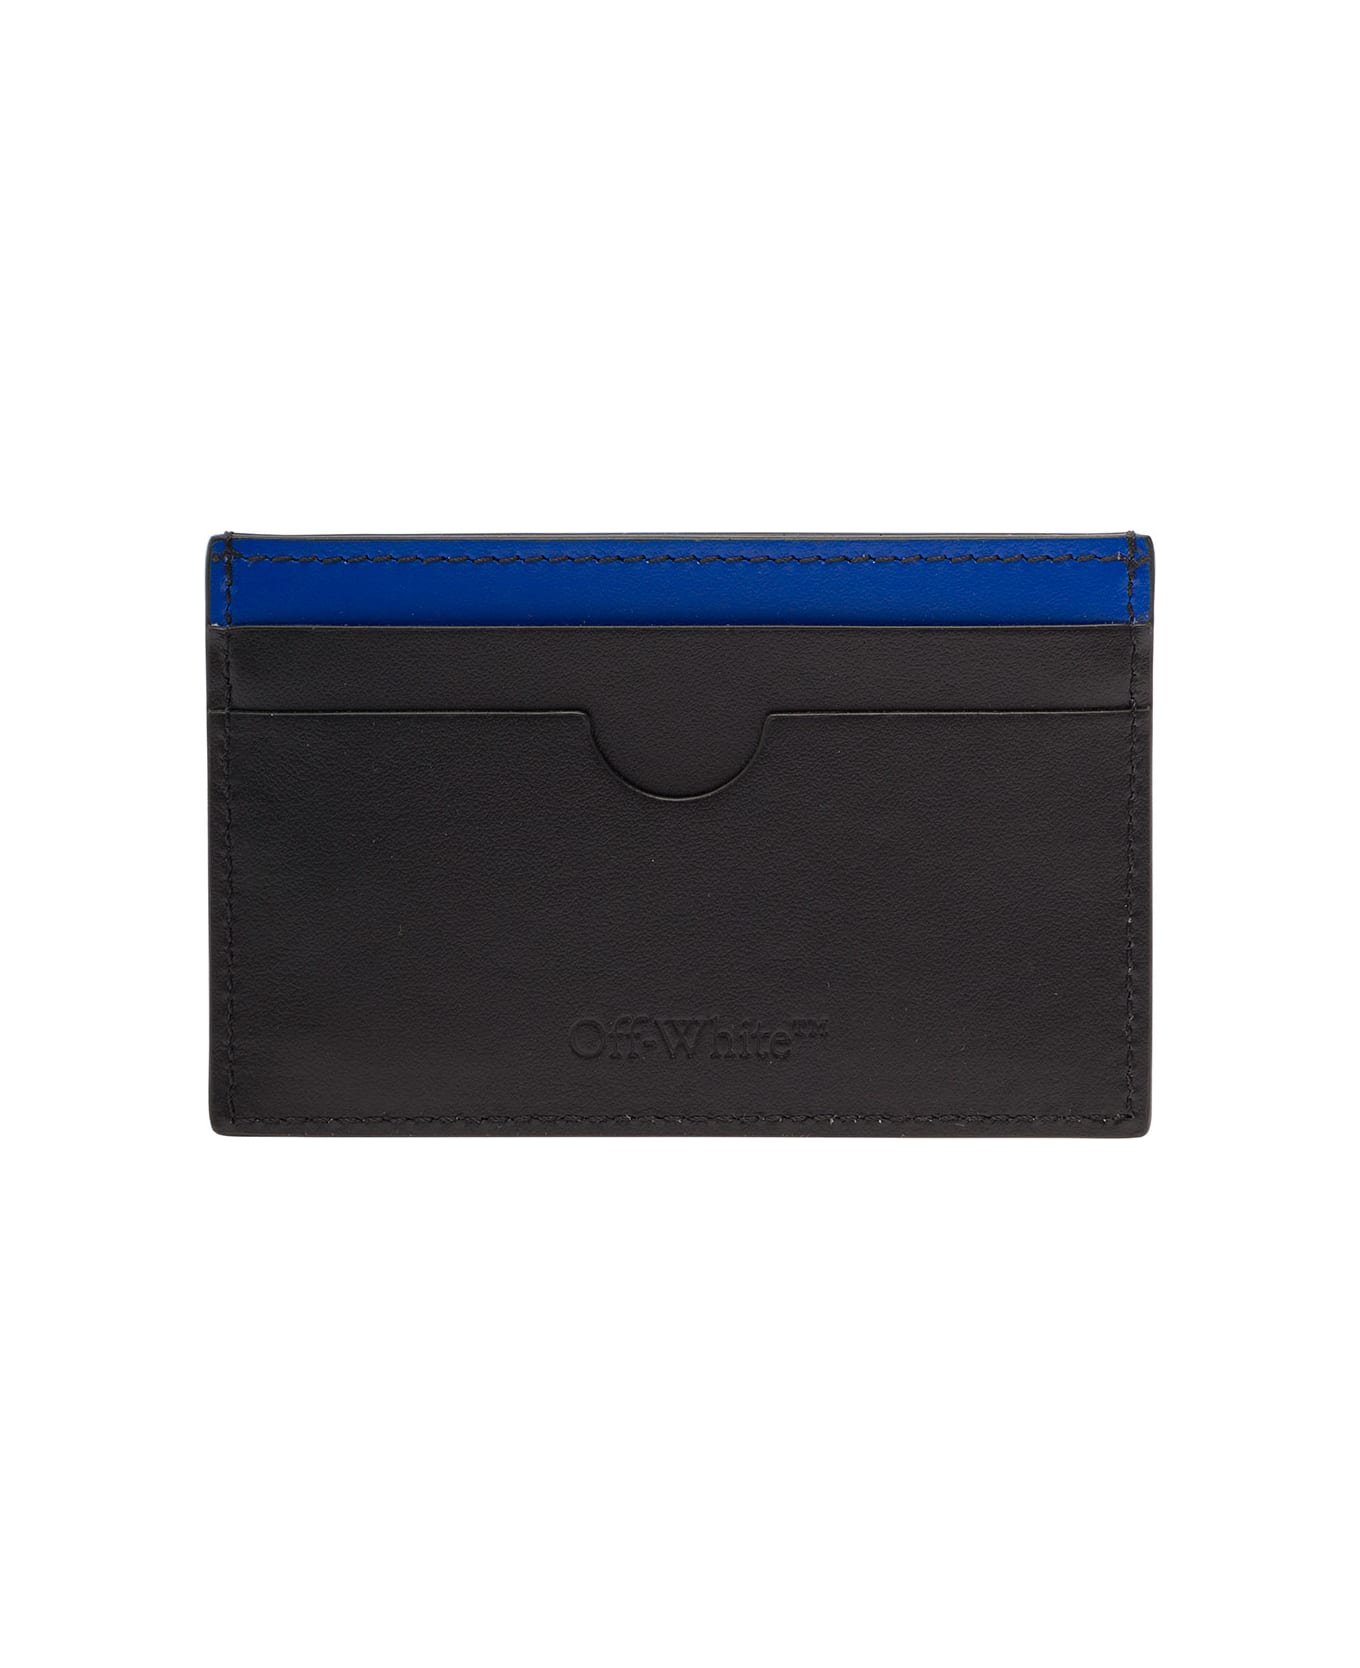 Off-White Jitney Simple Card Case Black Blue - Black